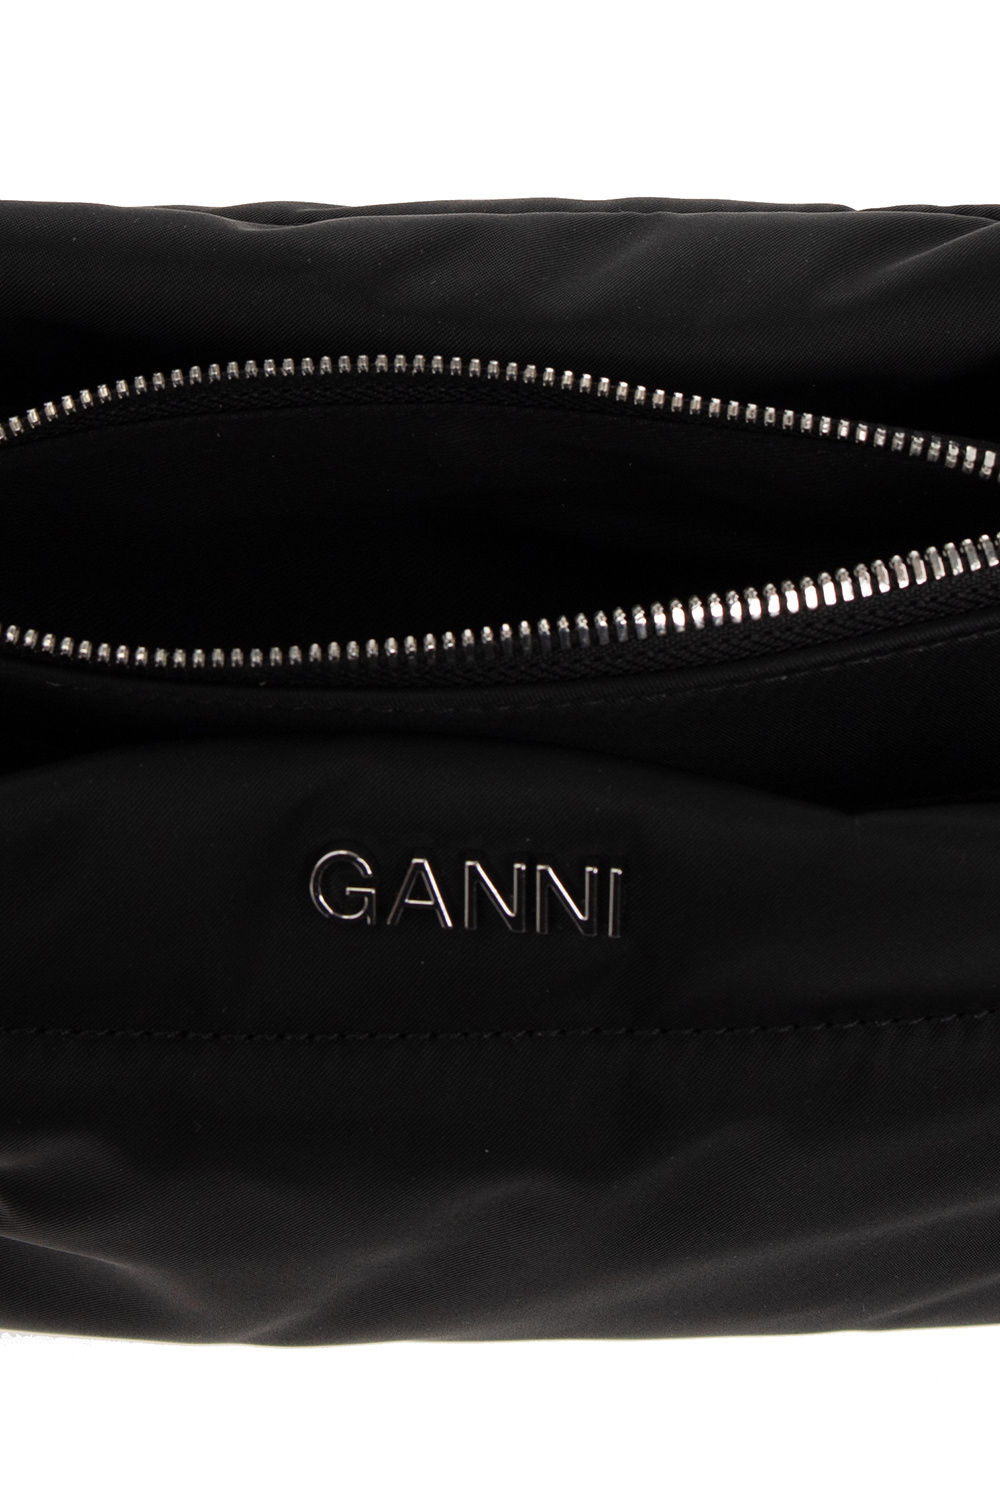 Ganni Shoulder Moschino bag with logo